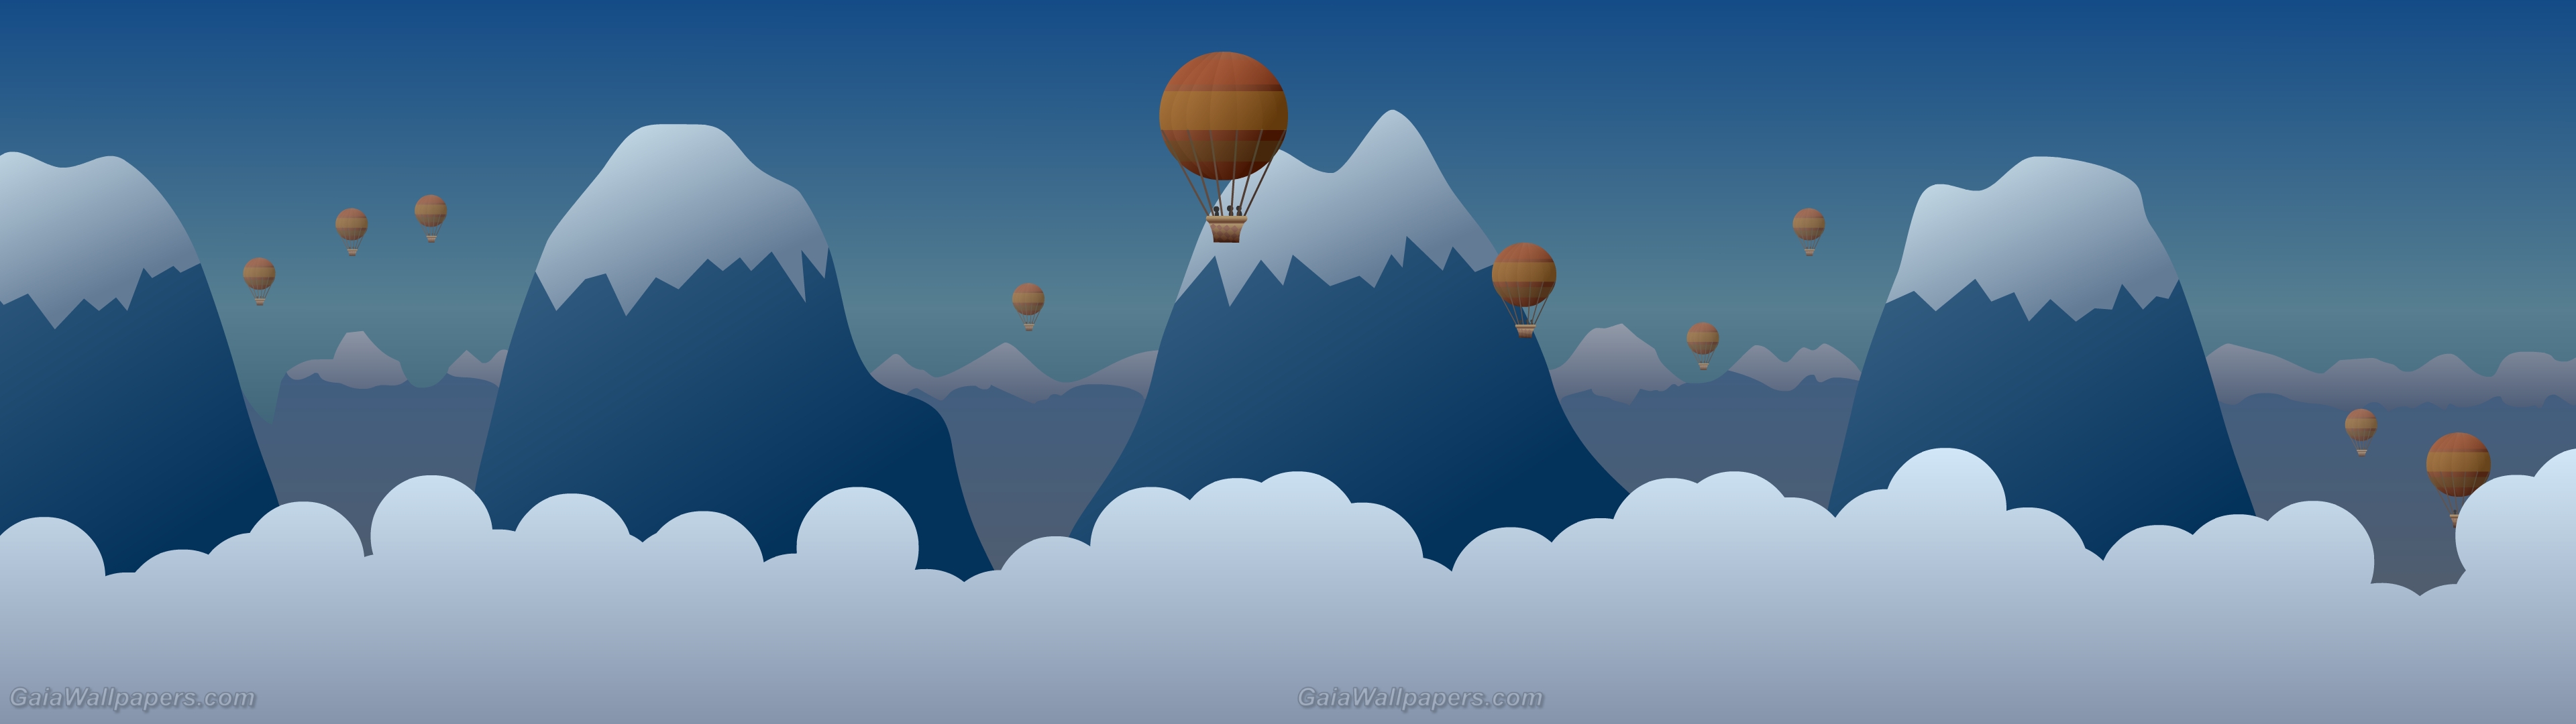 Imaginary Balloon Trip In The Mountains - Hot Air Balloon - HD Wallpaper 